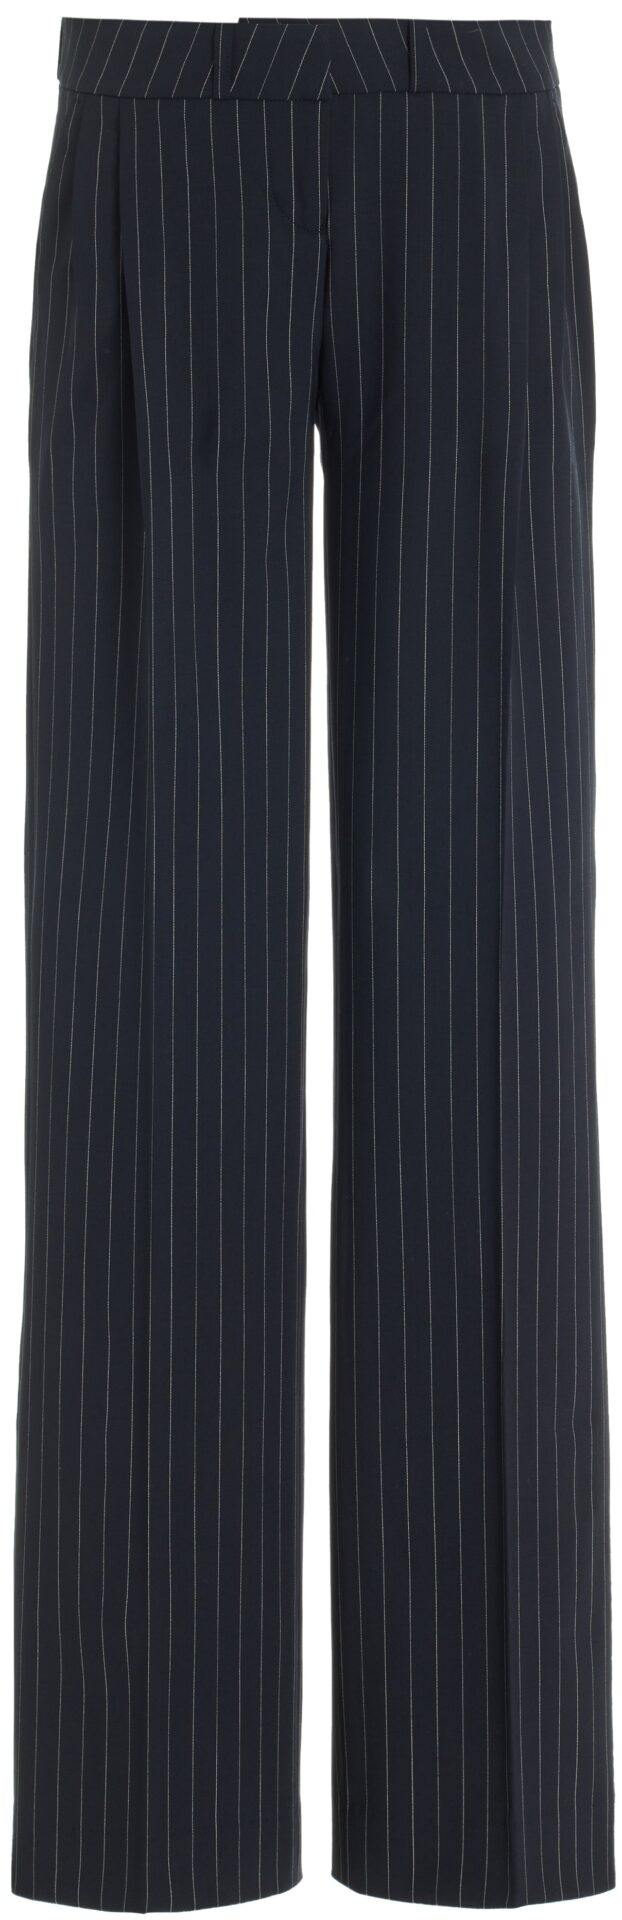 Pants (Dark Navy Pinstripe) | style